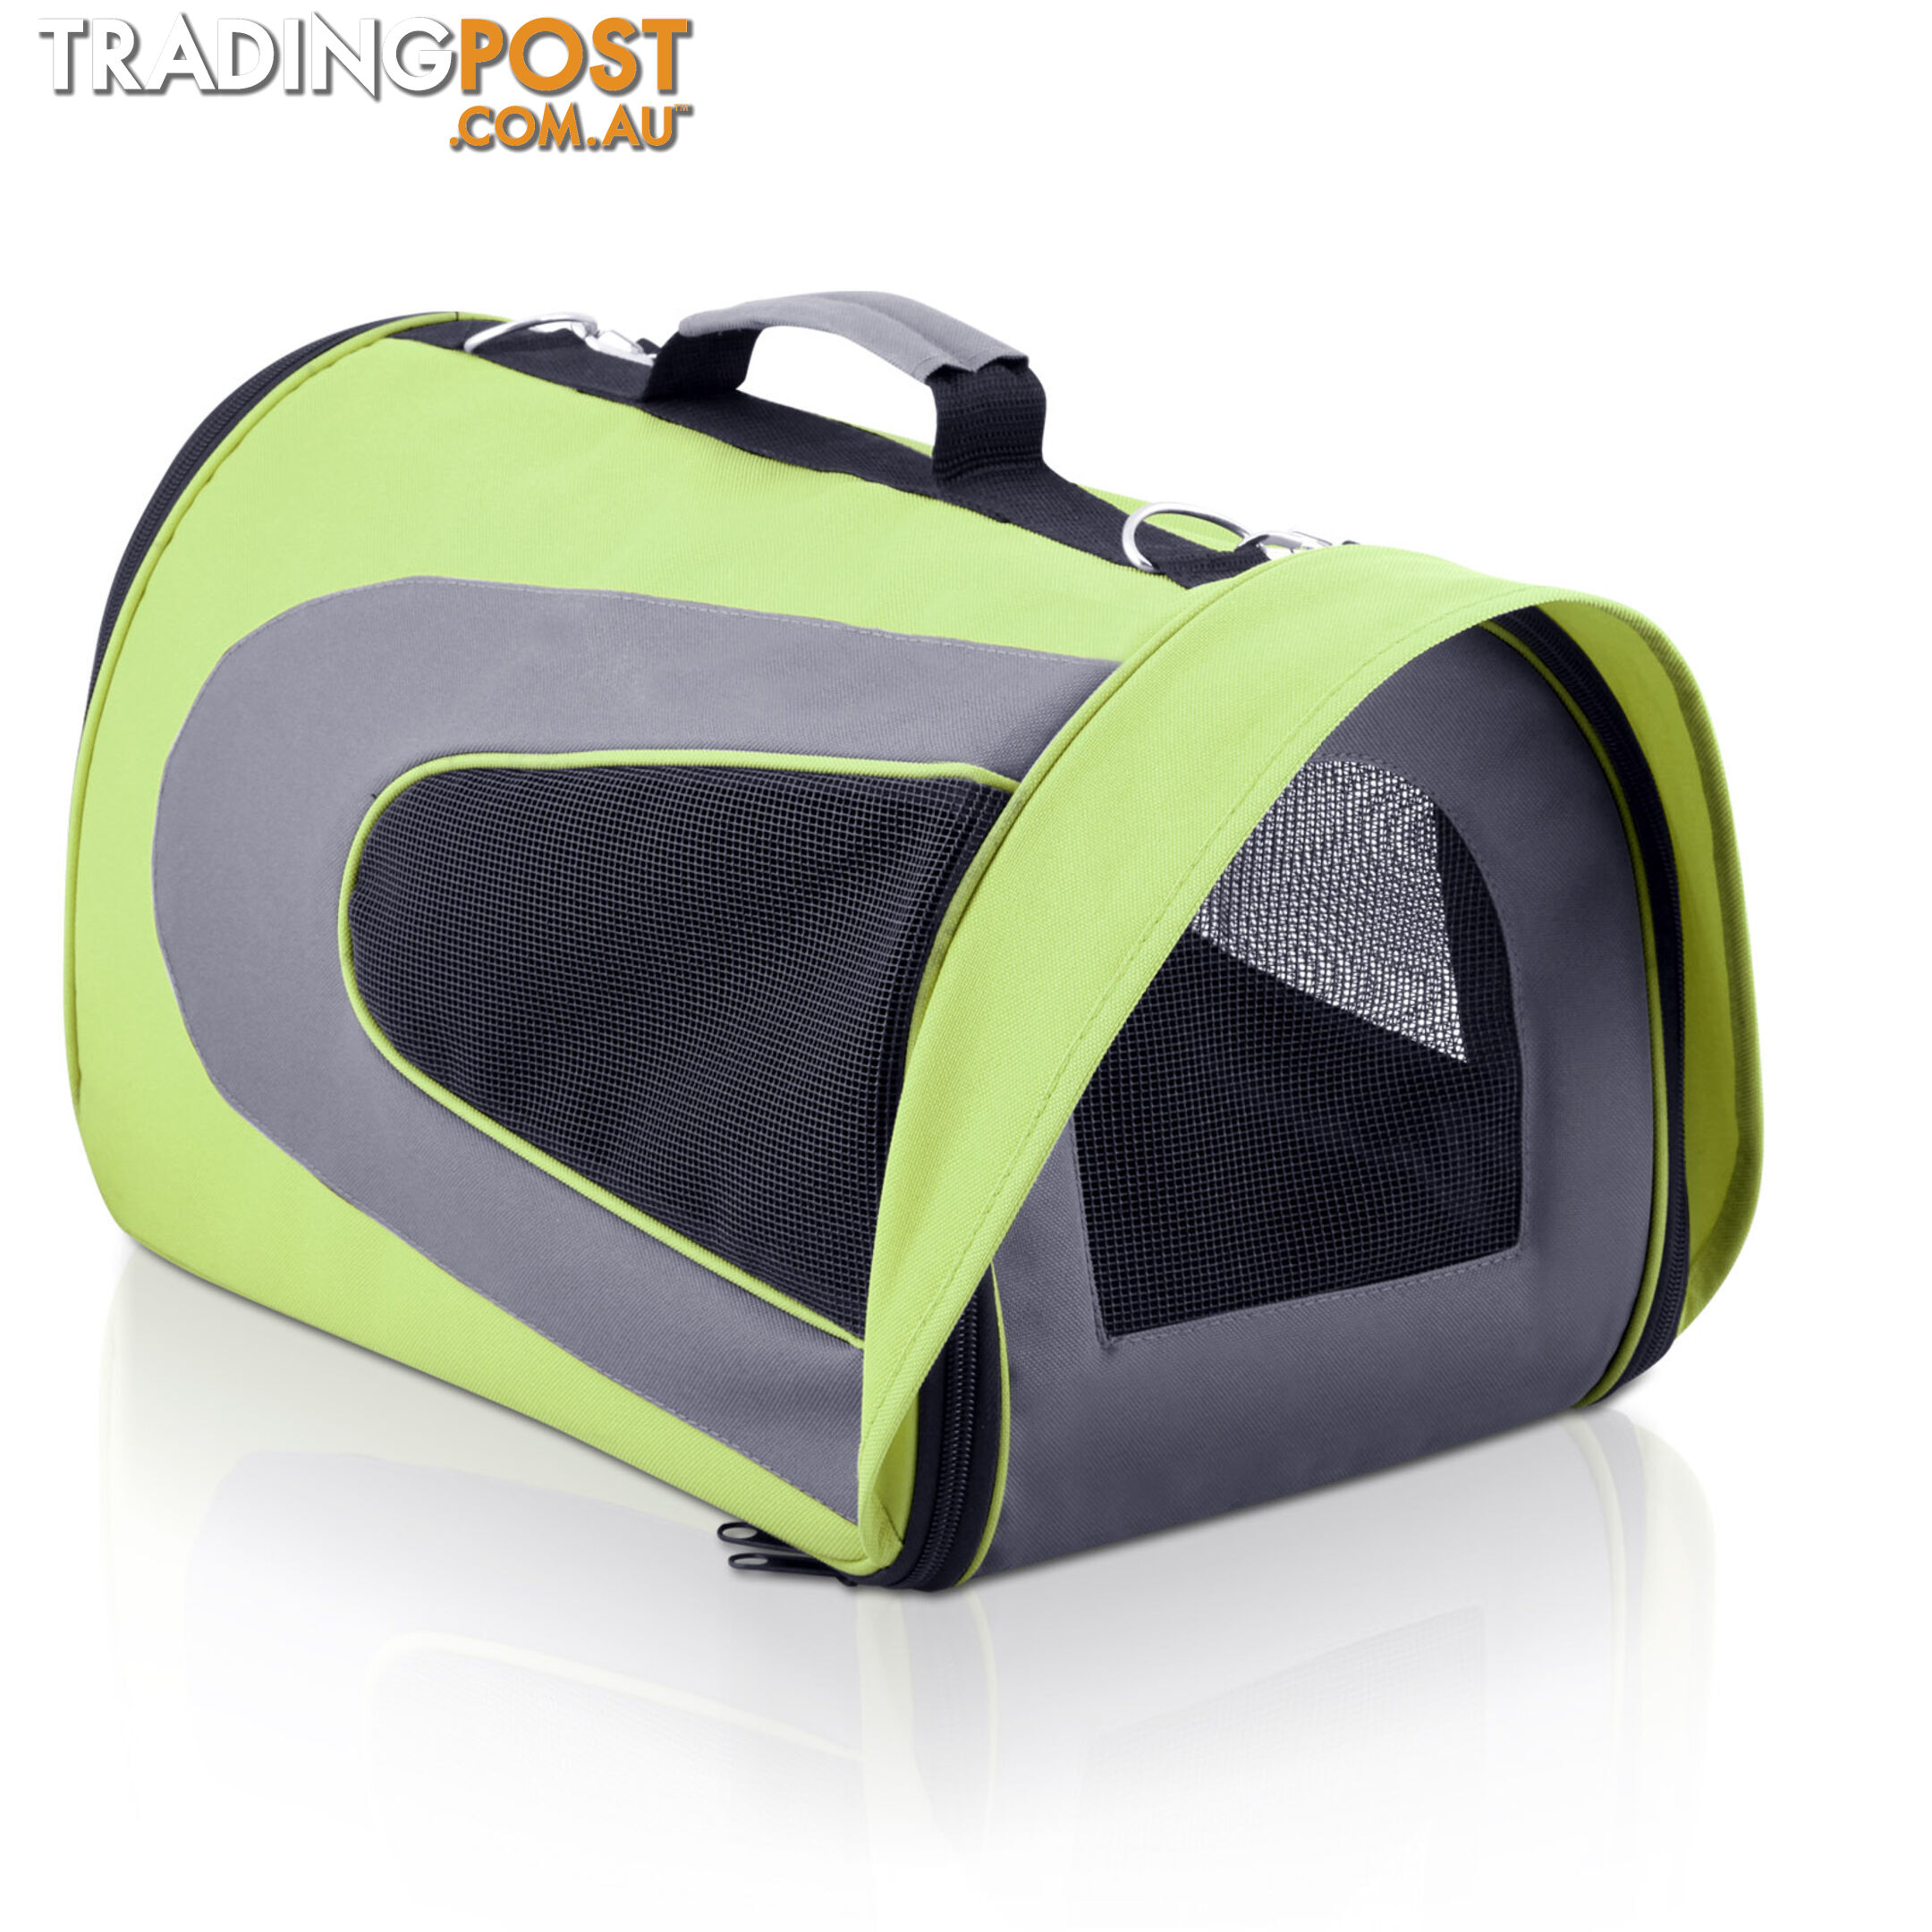 Pet Dog Cat Carrier Travel Bag XLarge Lime Green